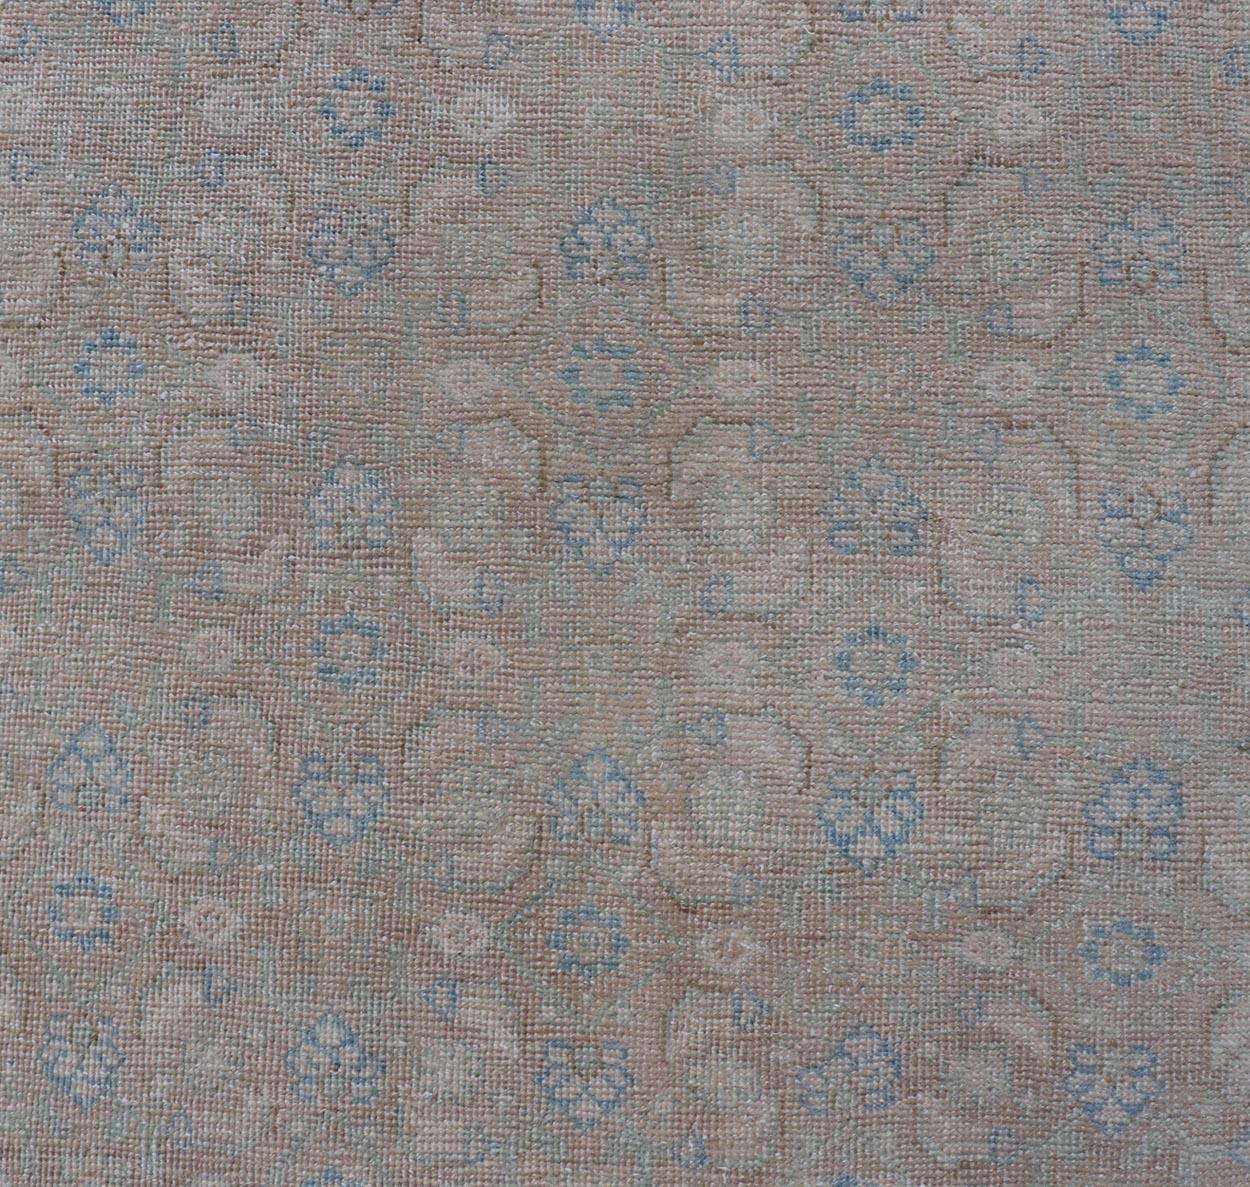 Geometric hand knotted Persian antique Mahal runner in blue, cream, and brown
Keivan Woven Arts / rug/TU-MTU-234, country of origin / type: Iran / Mahal, circa 1920

Measures: 3'6 x 13'9.